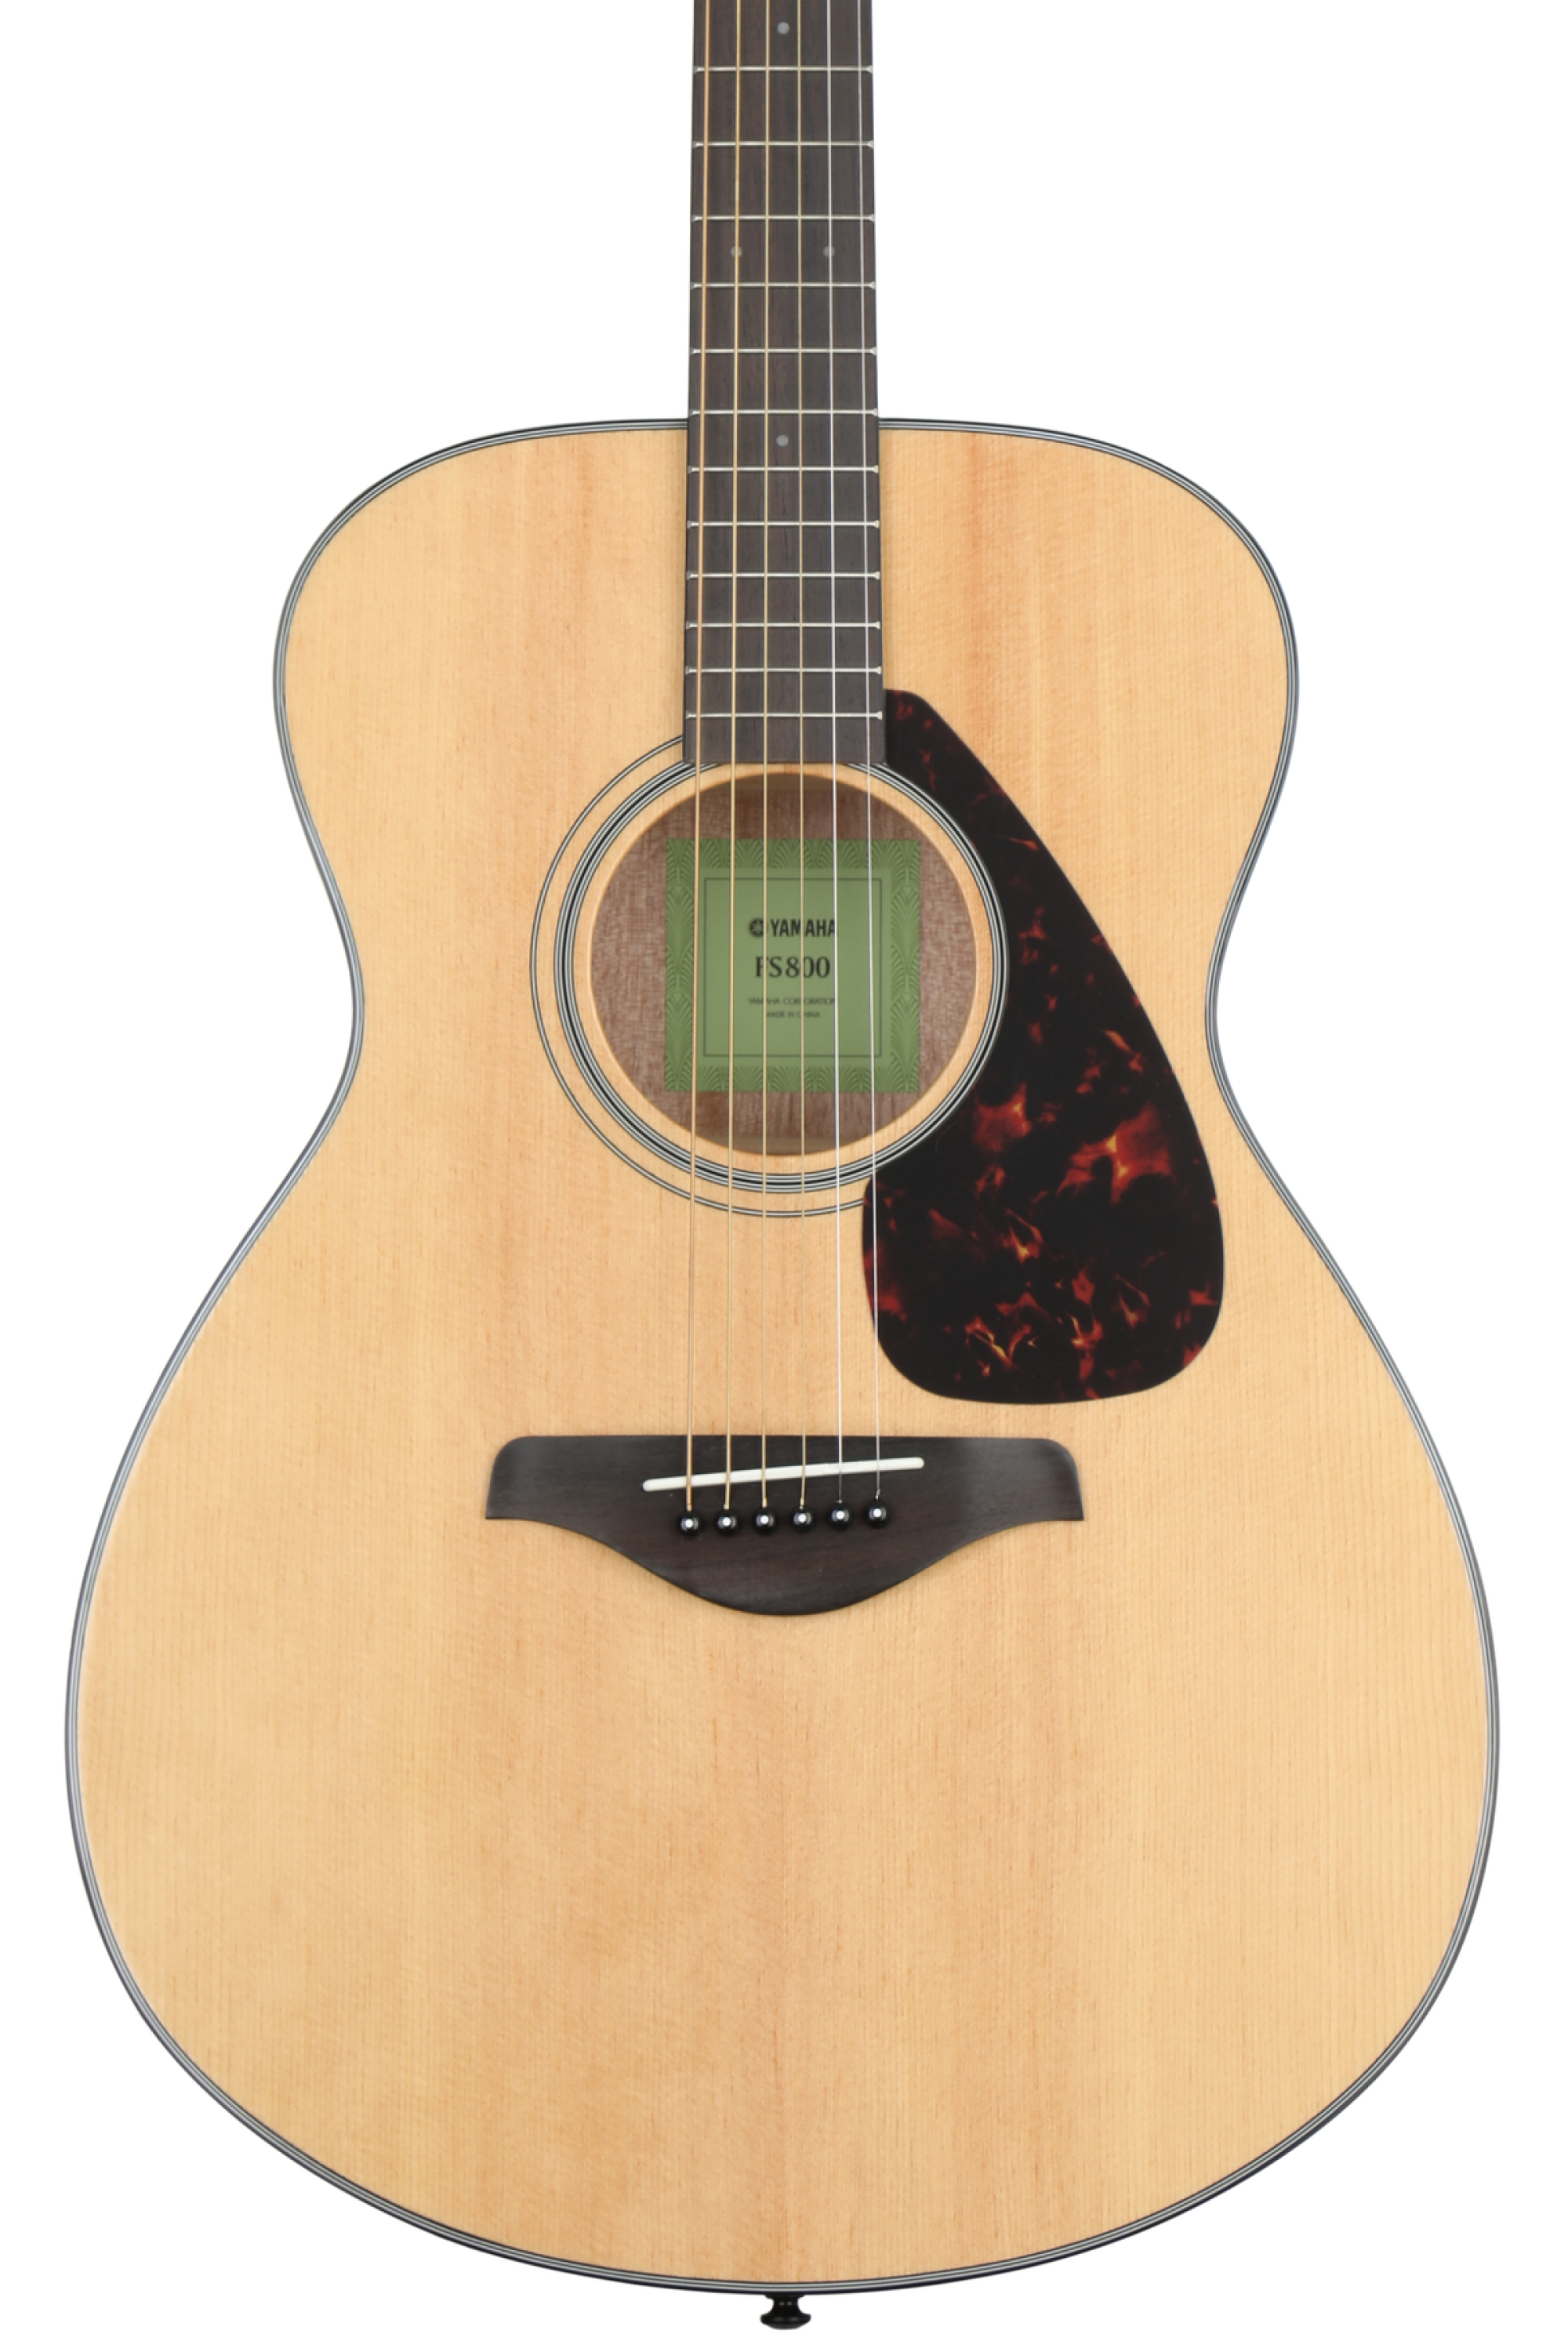 Bundled Item: Yamaha FS800 Concert Acoustic Guitar - Natural